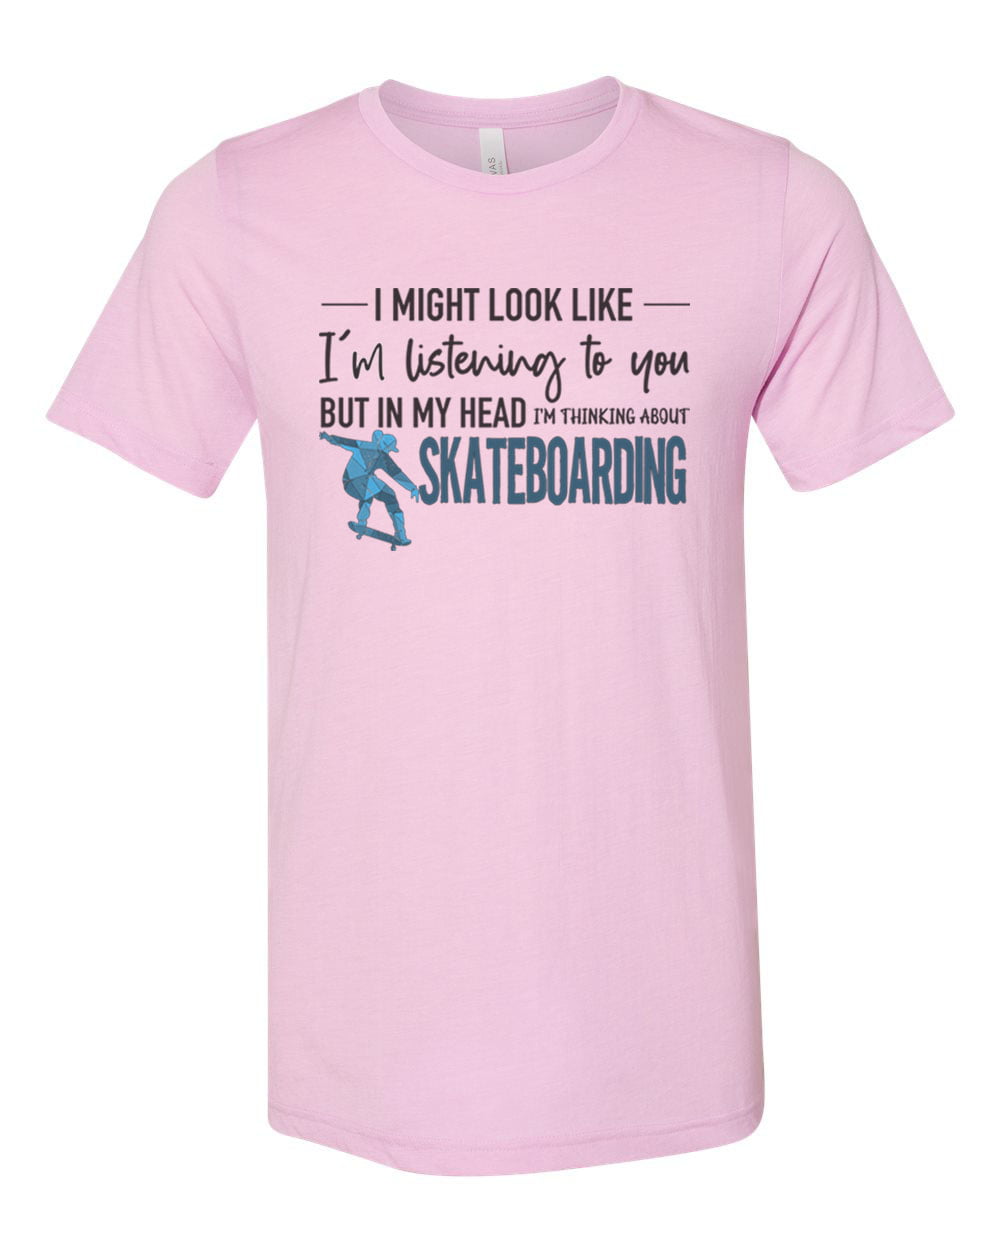 Skateboard Shirt, Thinking About Skateboarding, Unisex Fit